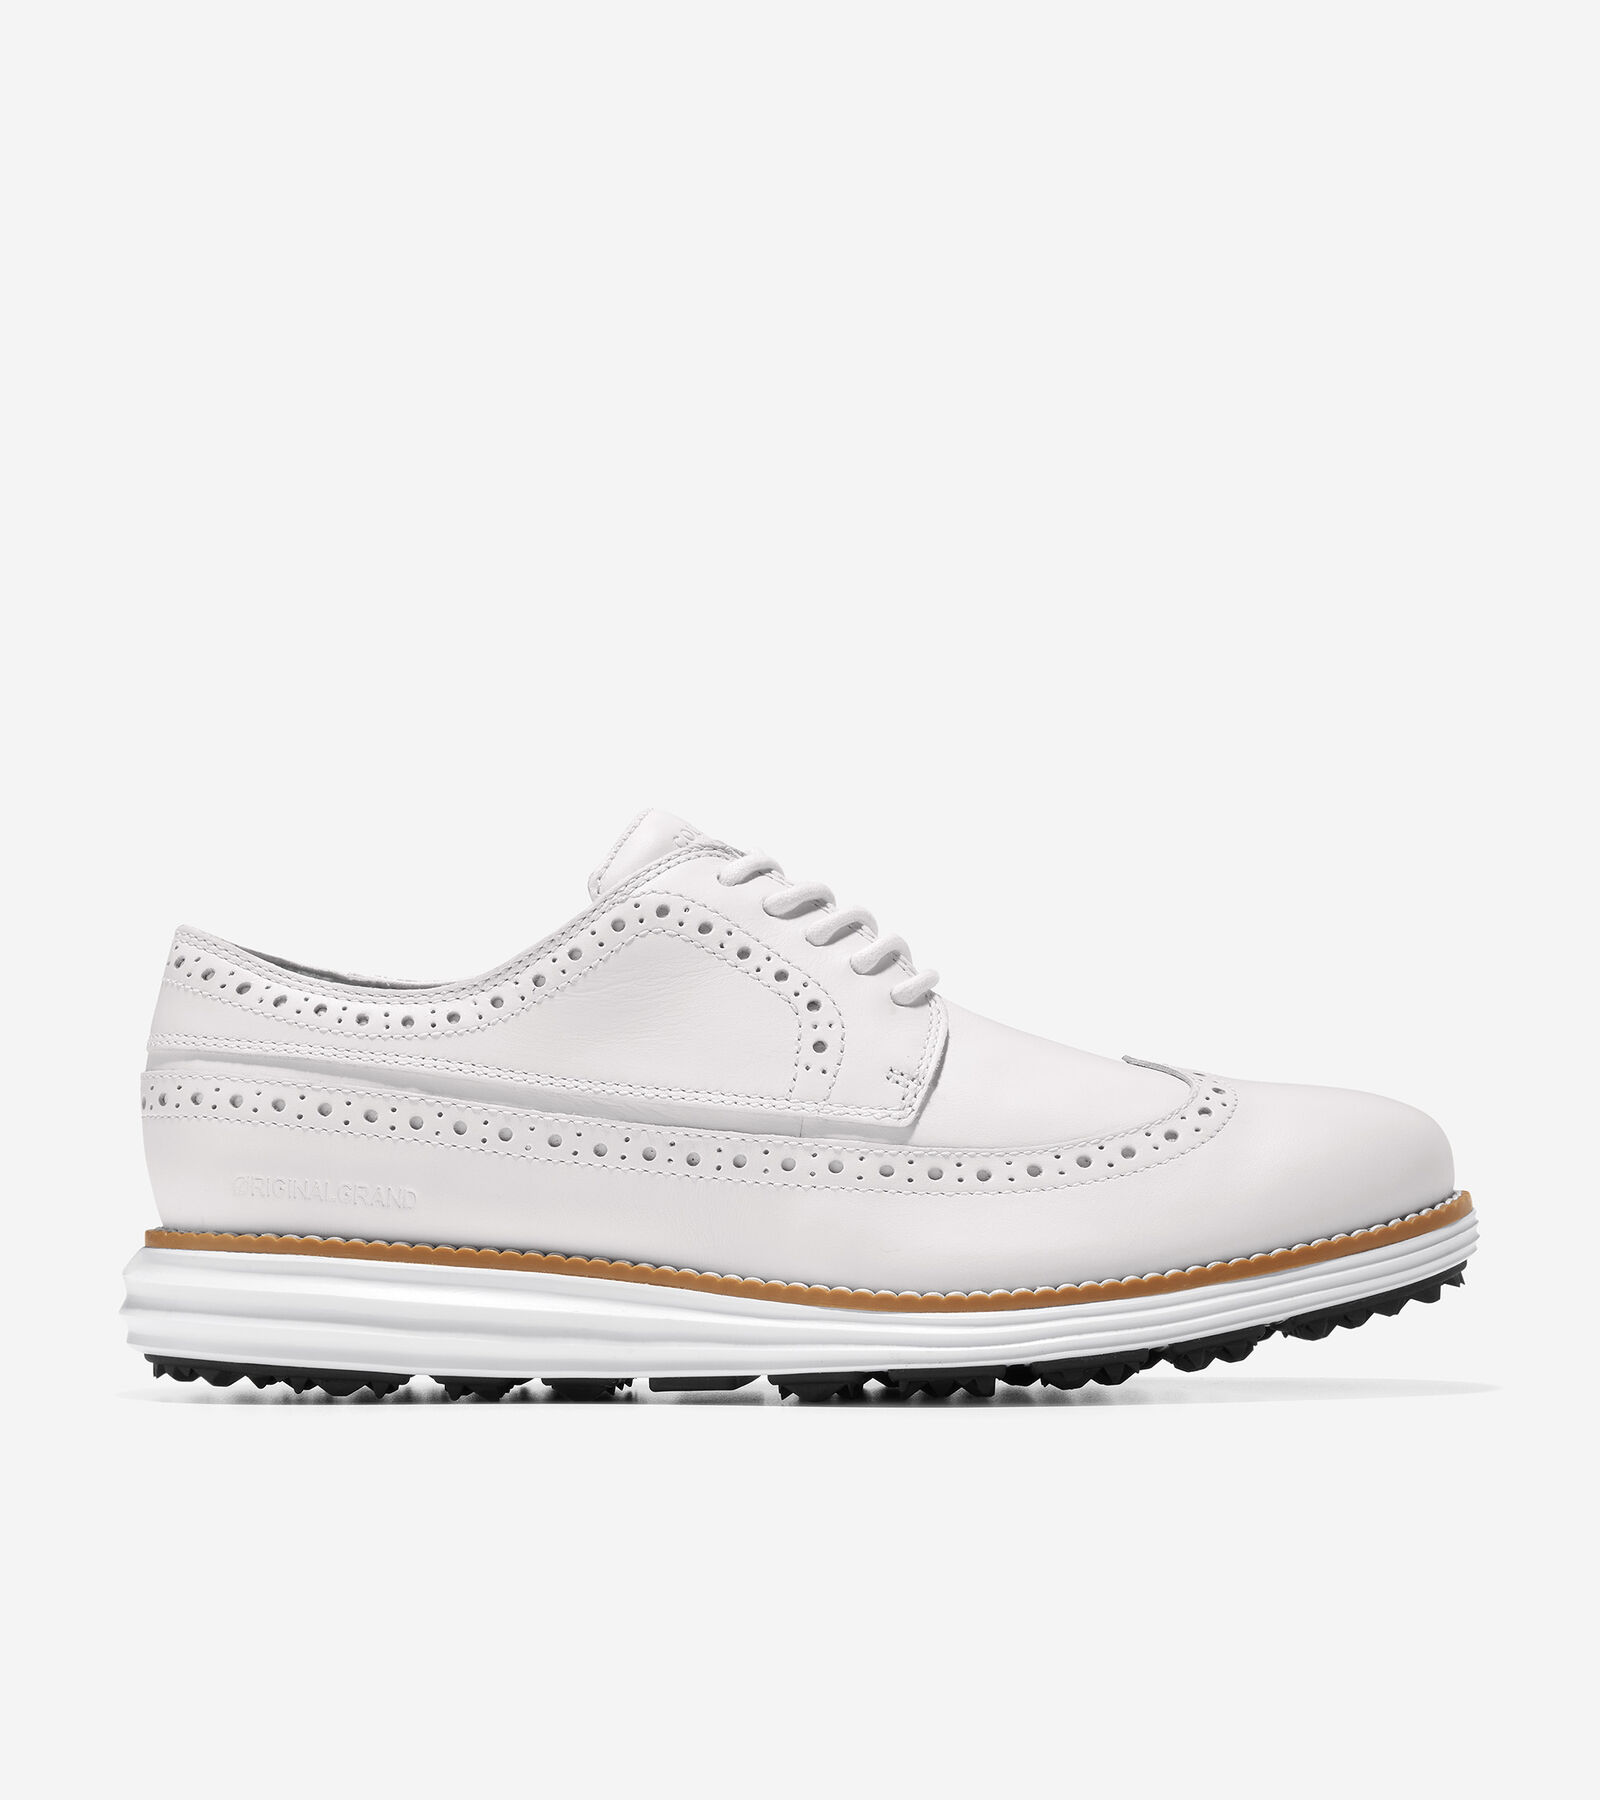 Cole Haan Men's Øriginalgrand Golf Shoe In Optic White-natural-optic White